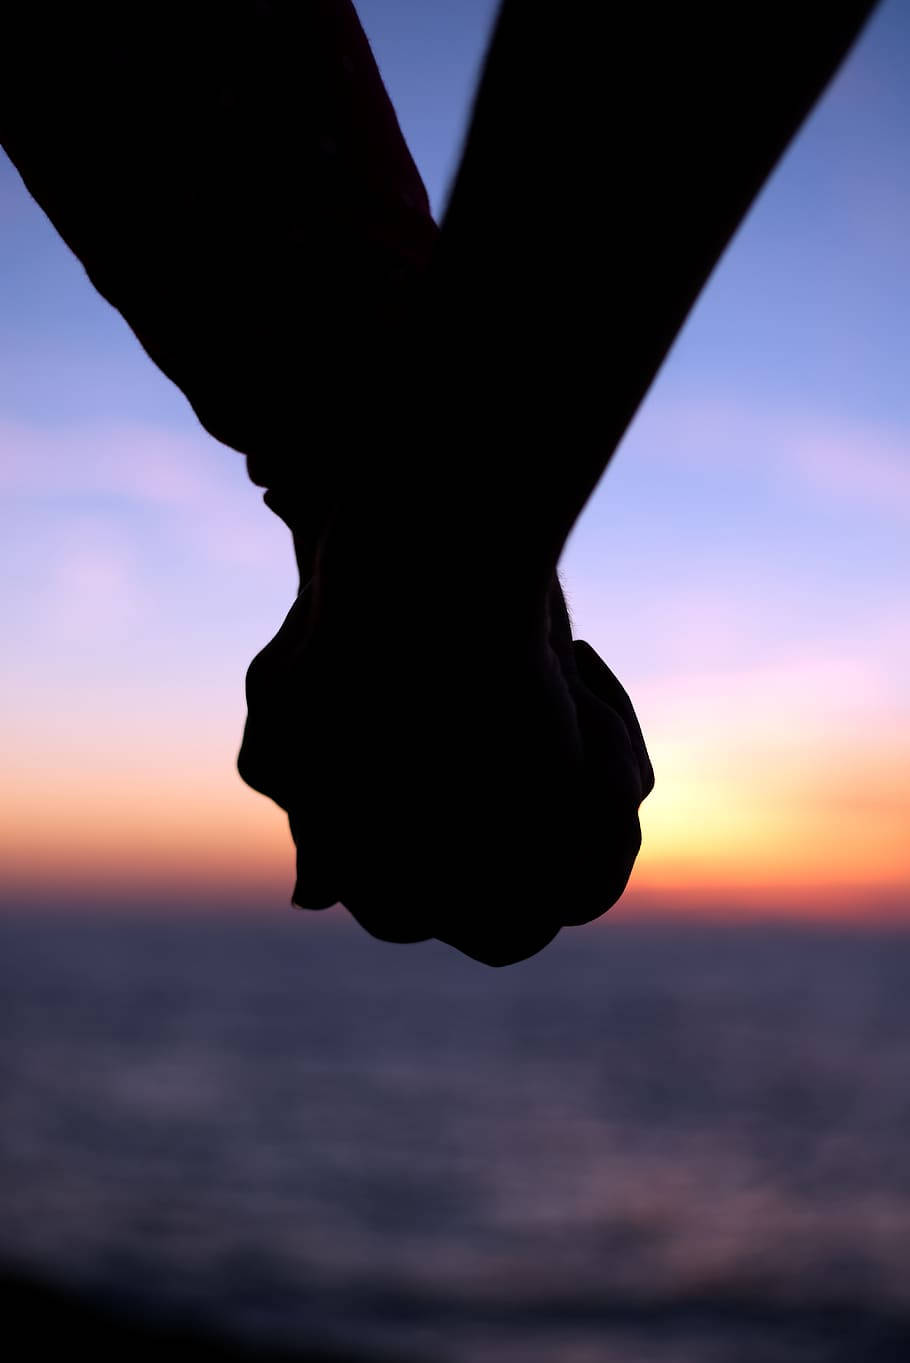 Holding Hands Silhouette In Horizon Sunset Wallpaper